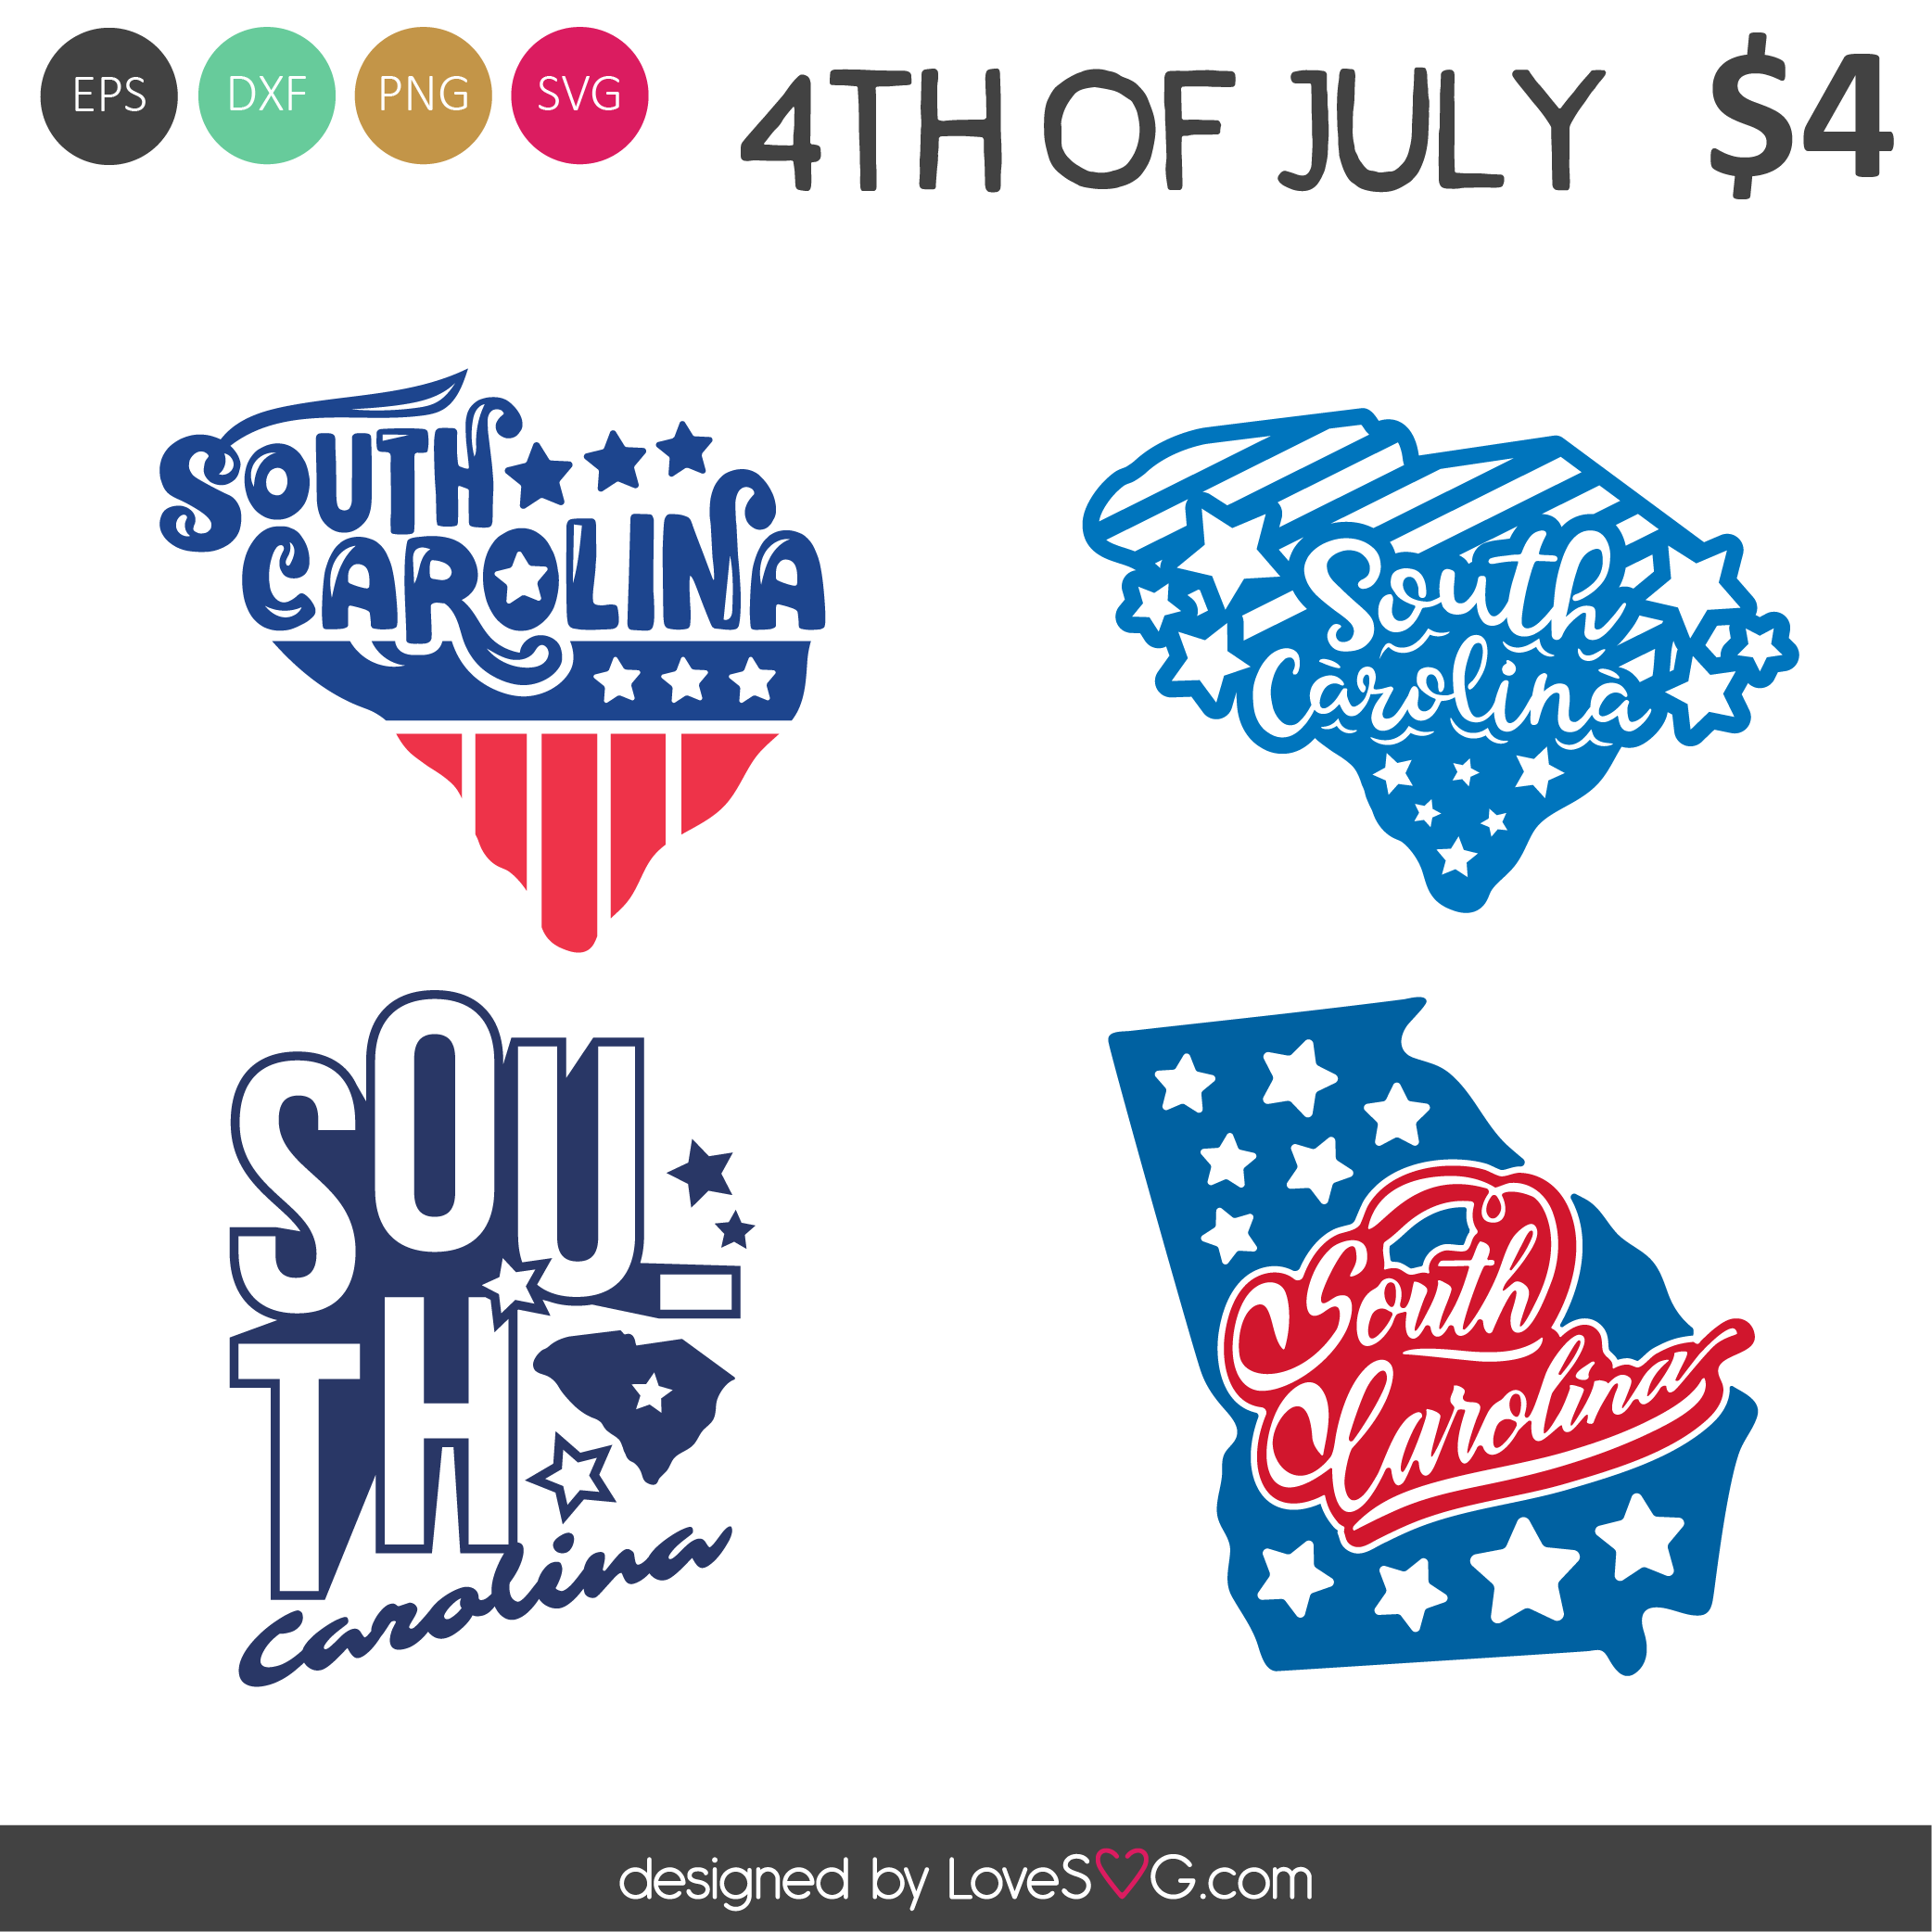 South Carolina SVG Cut Files - Lovesvg.com